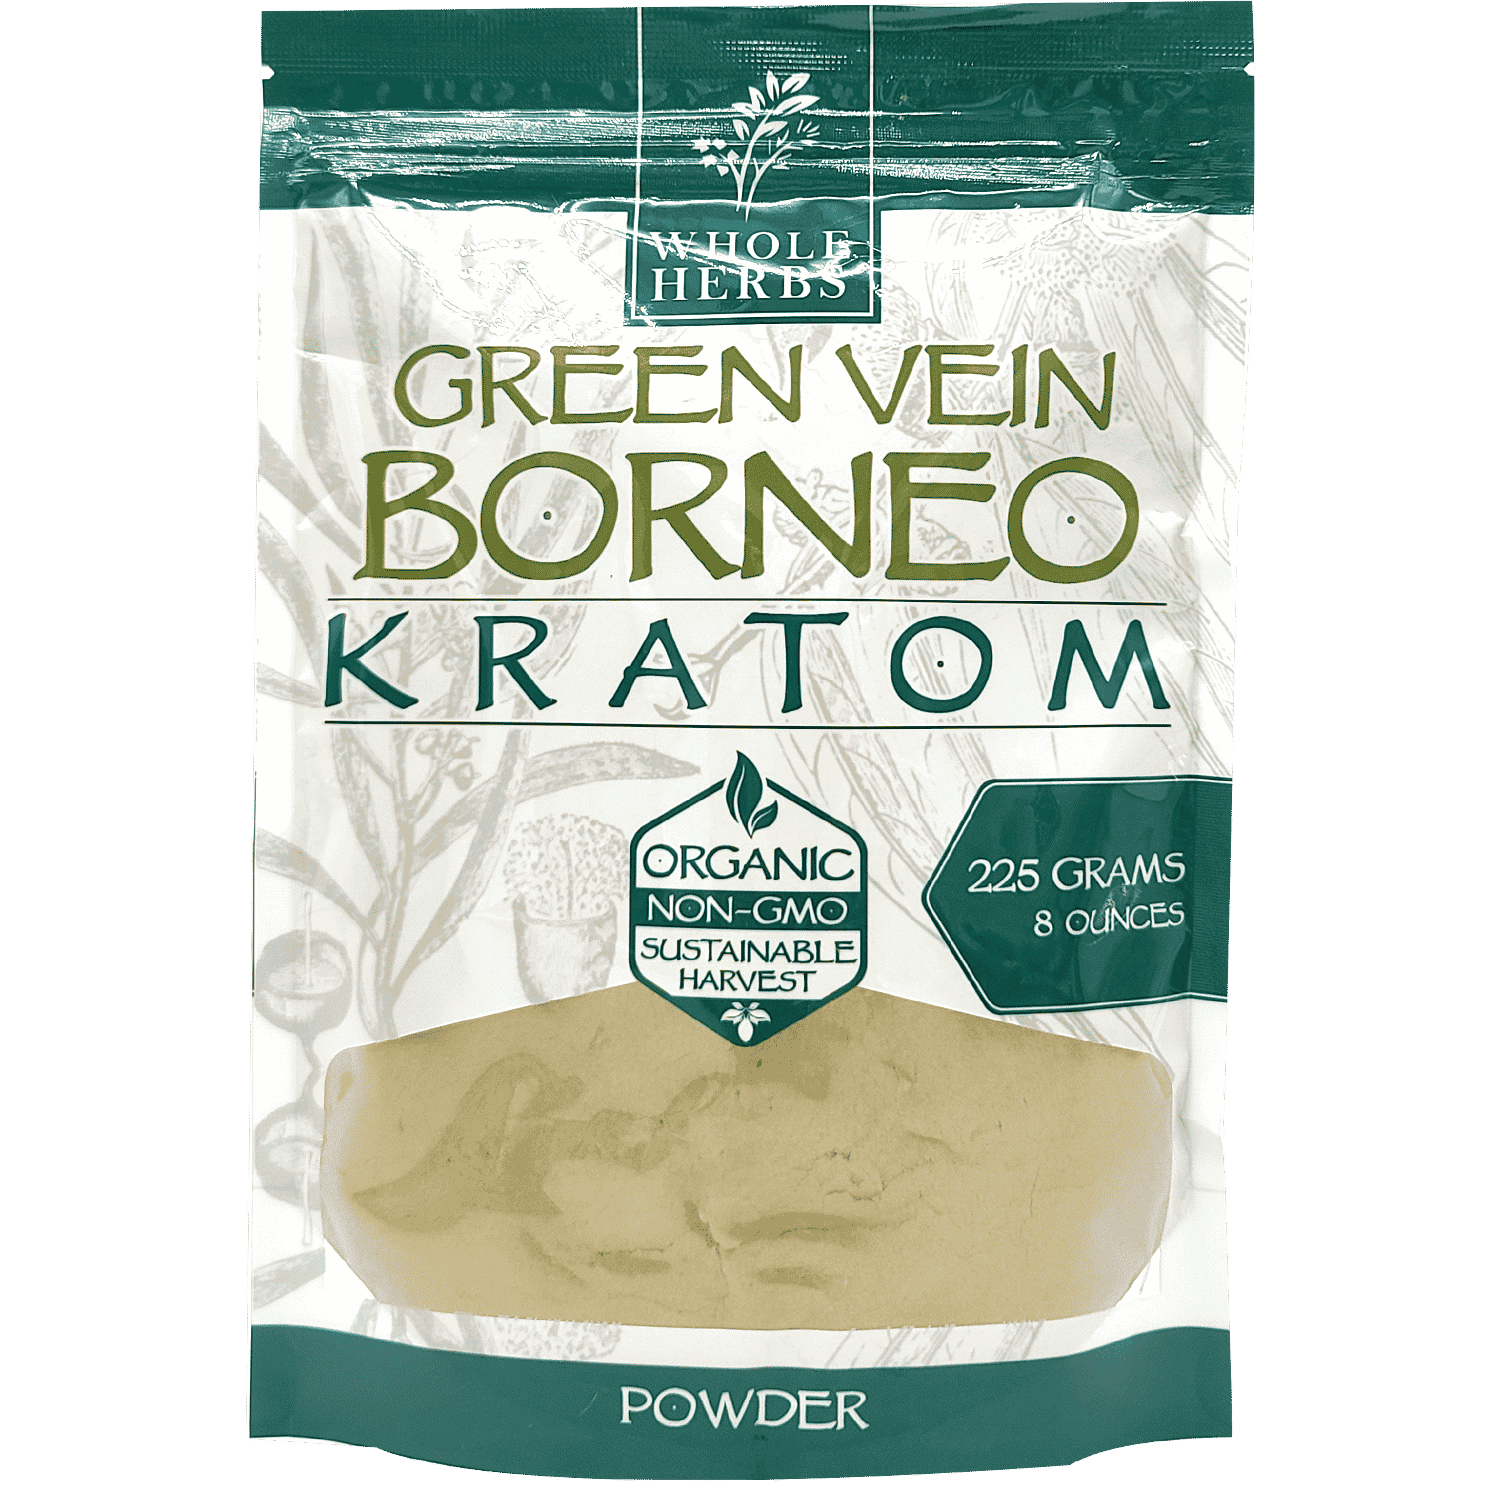 Whole Herbs Kratom Green Vein Borneo 225gm/8oz Powder